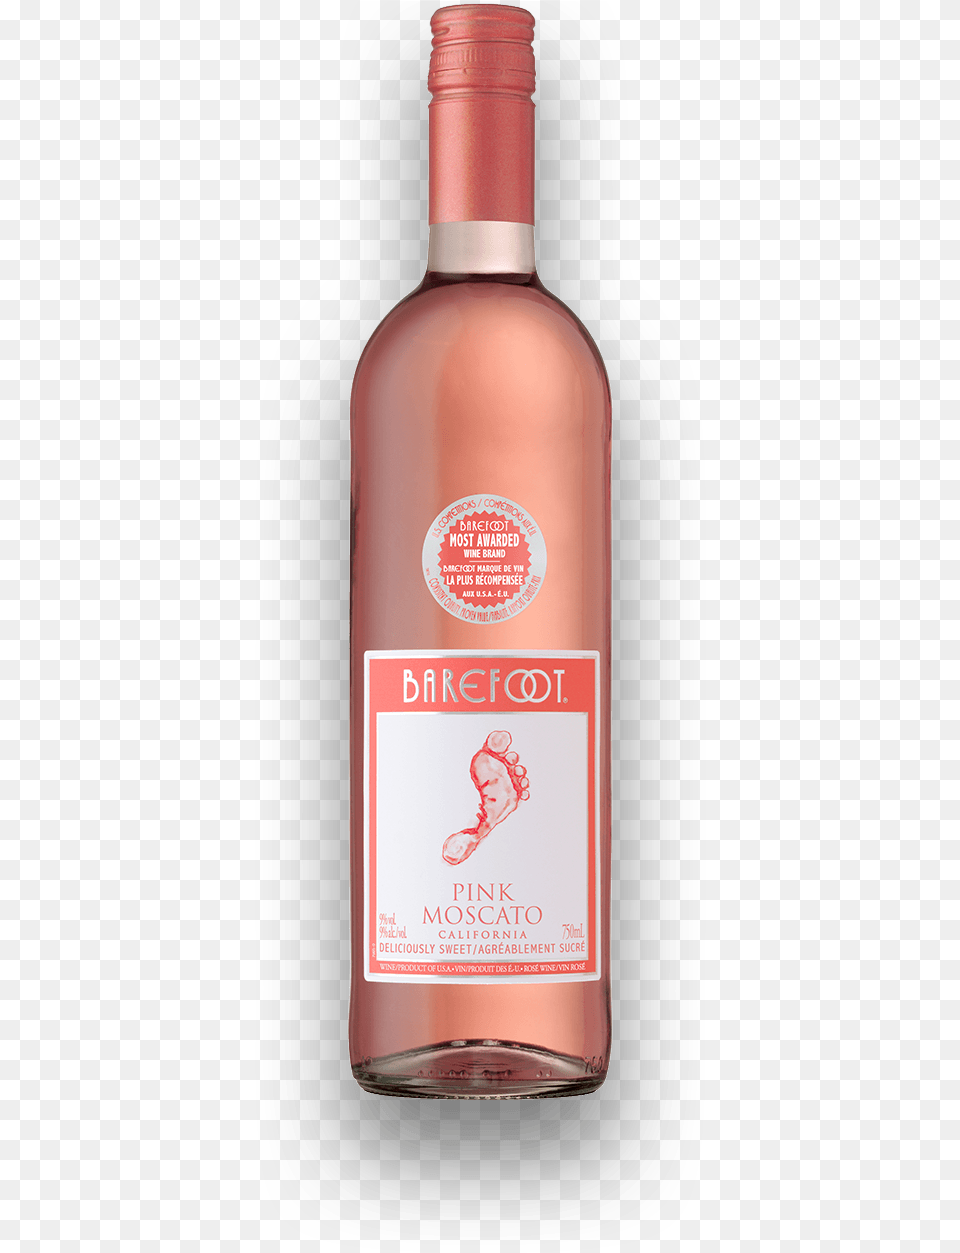 Barefoot Pink Moscato Wine Pink Barefoot Wine, Bottle, Alcohol, Beverage, Liquor Png Image